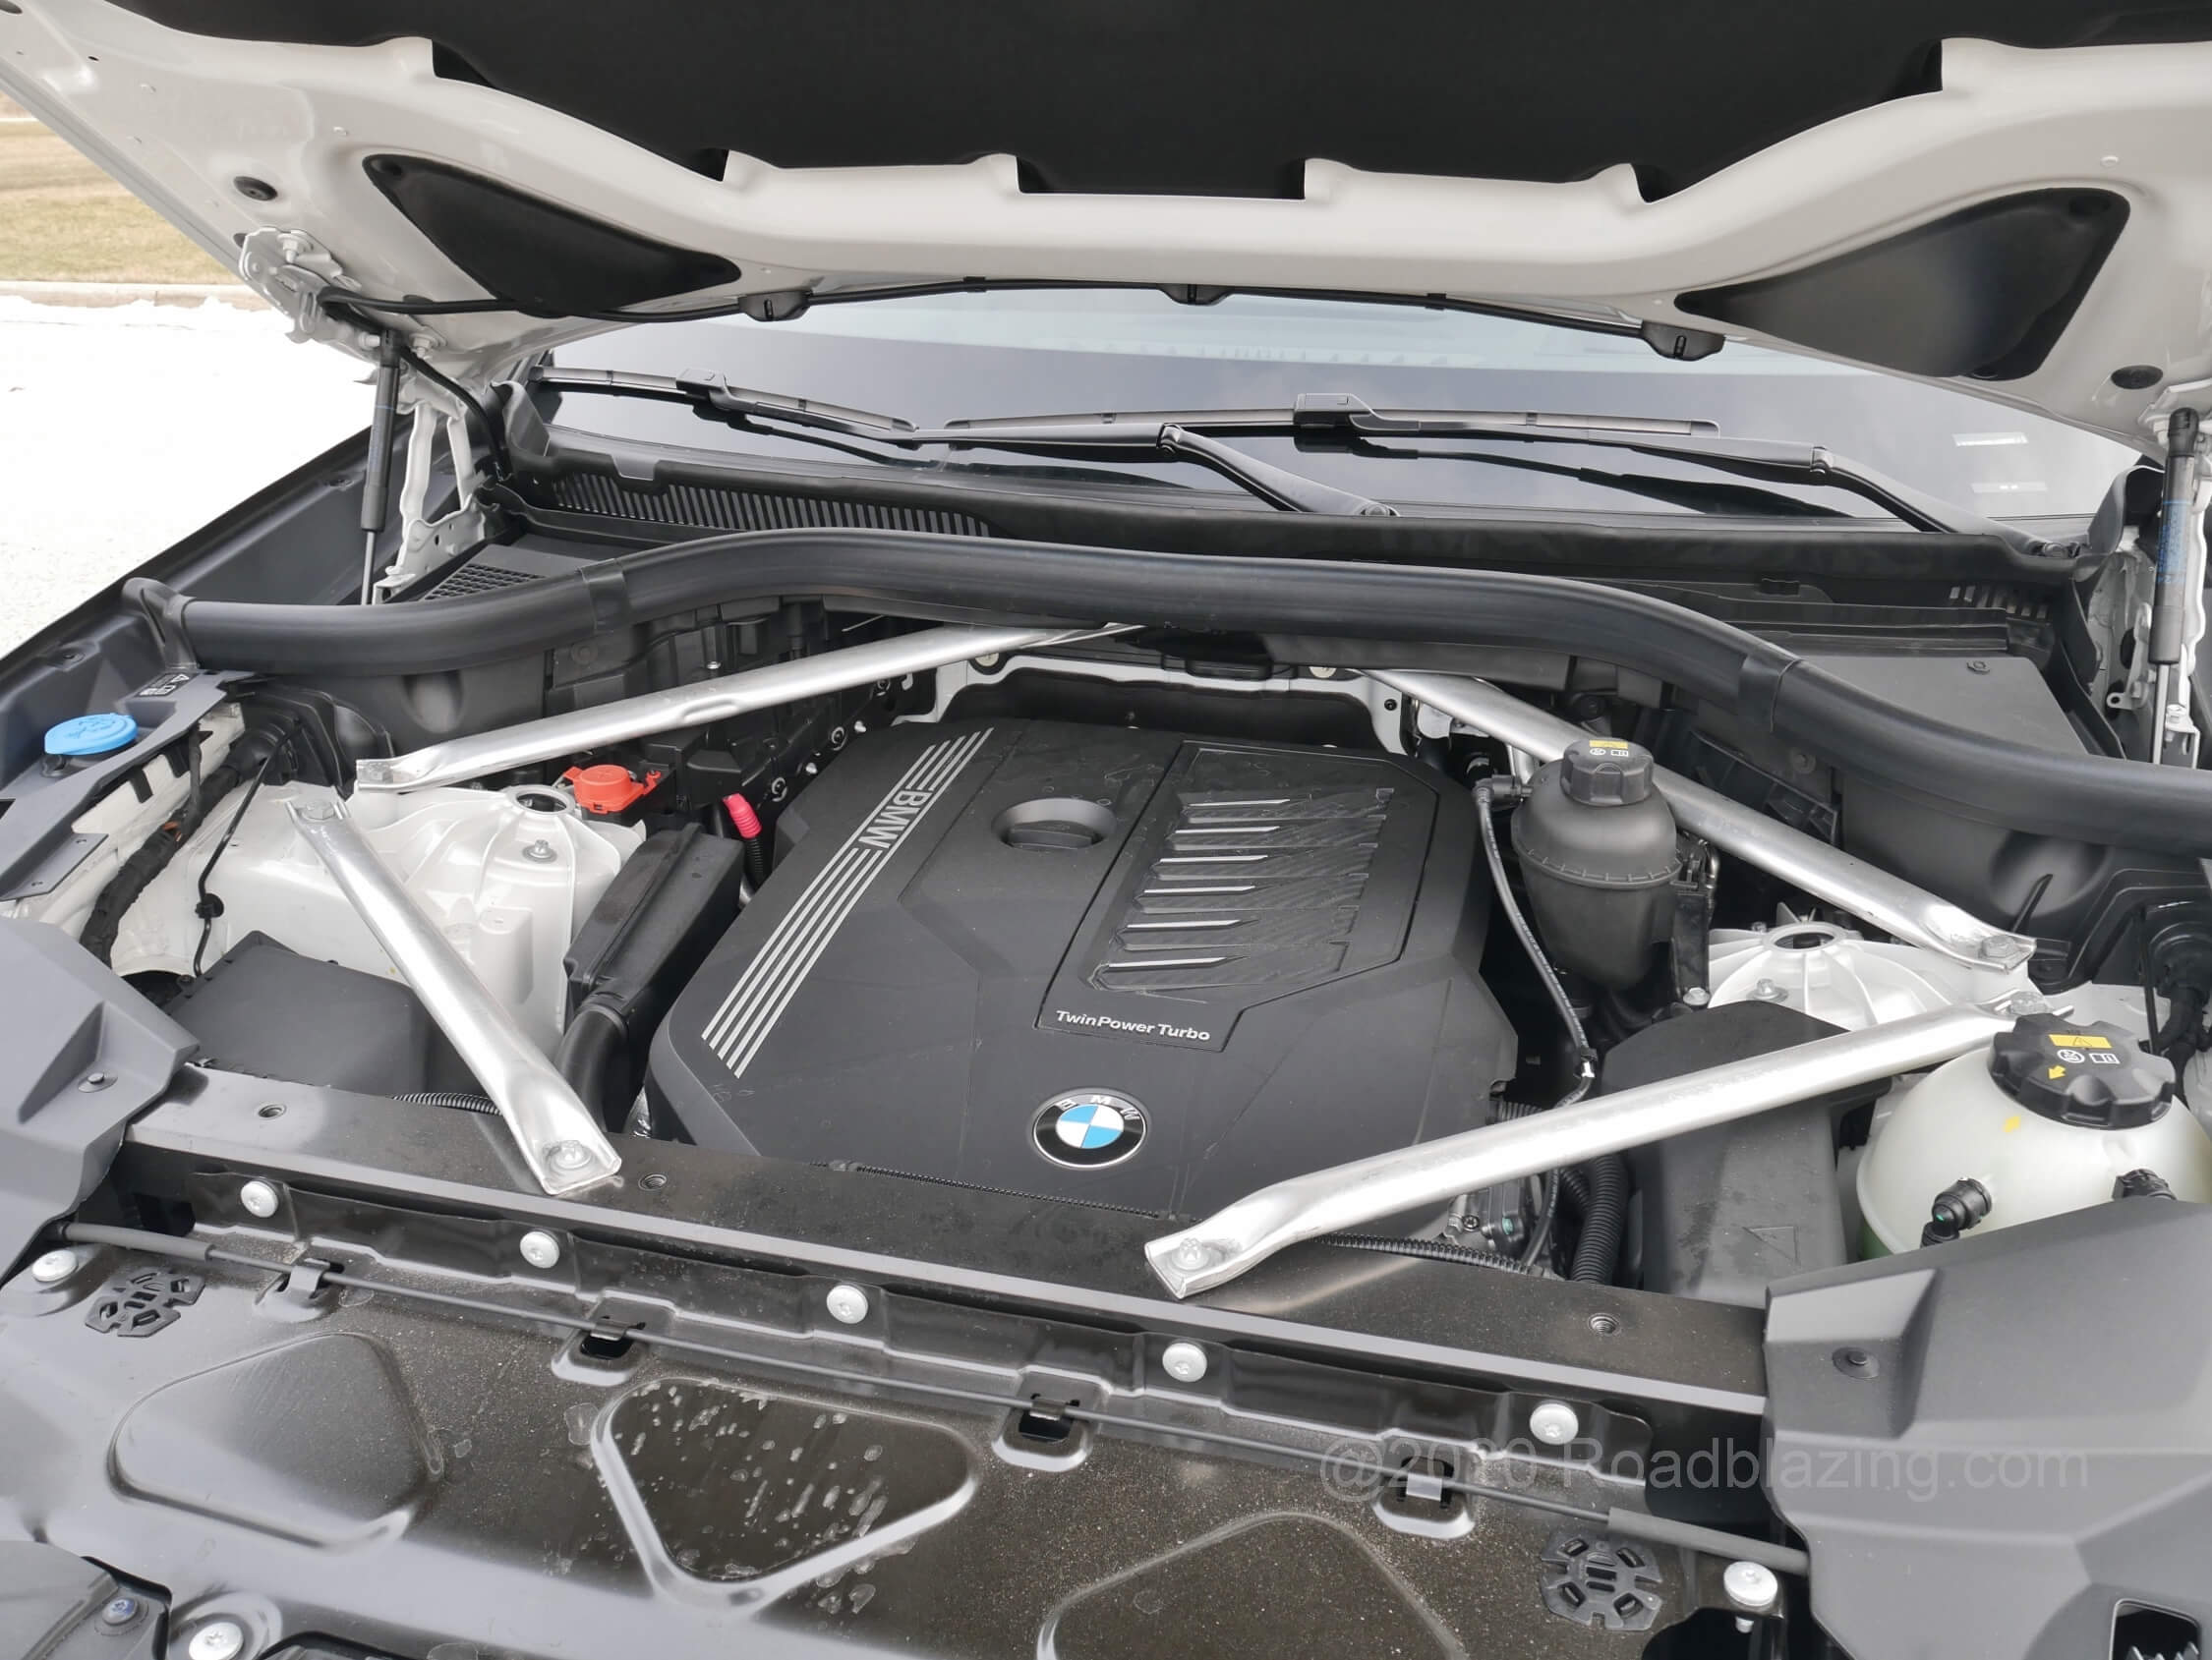 2020 BMW X6 xDrive 40i: new B55 twin-scroll turbo DOHC gas I-6 + 8-speed ZF autobox + open differential rear biased all-wheel drive